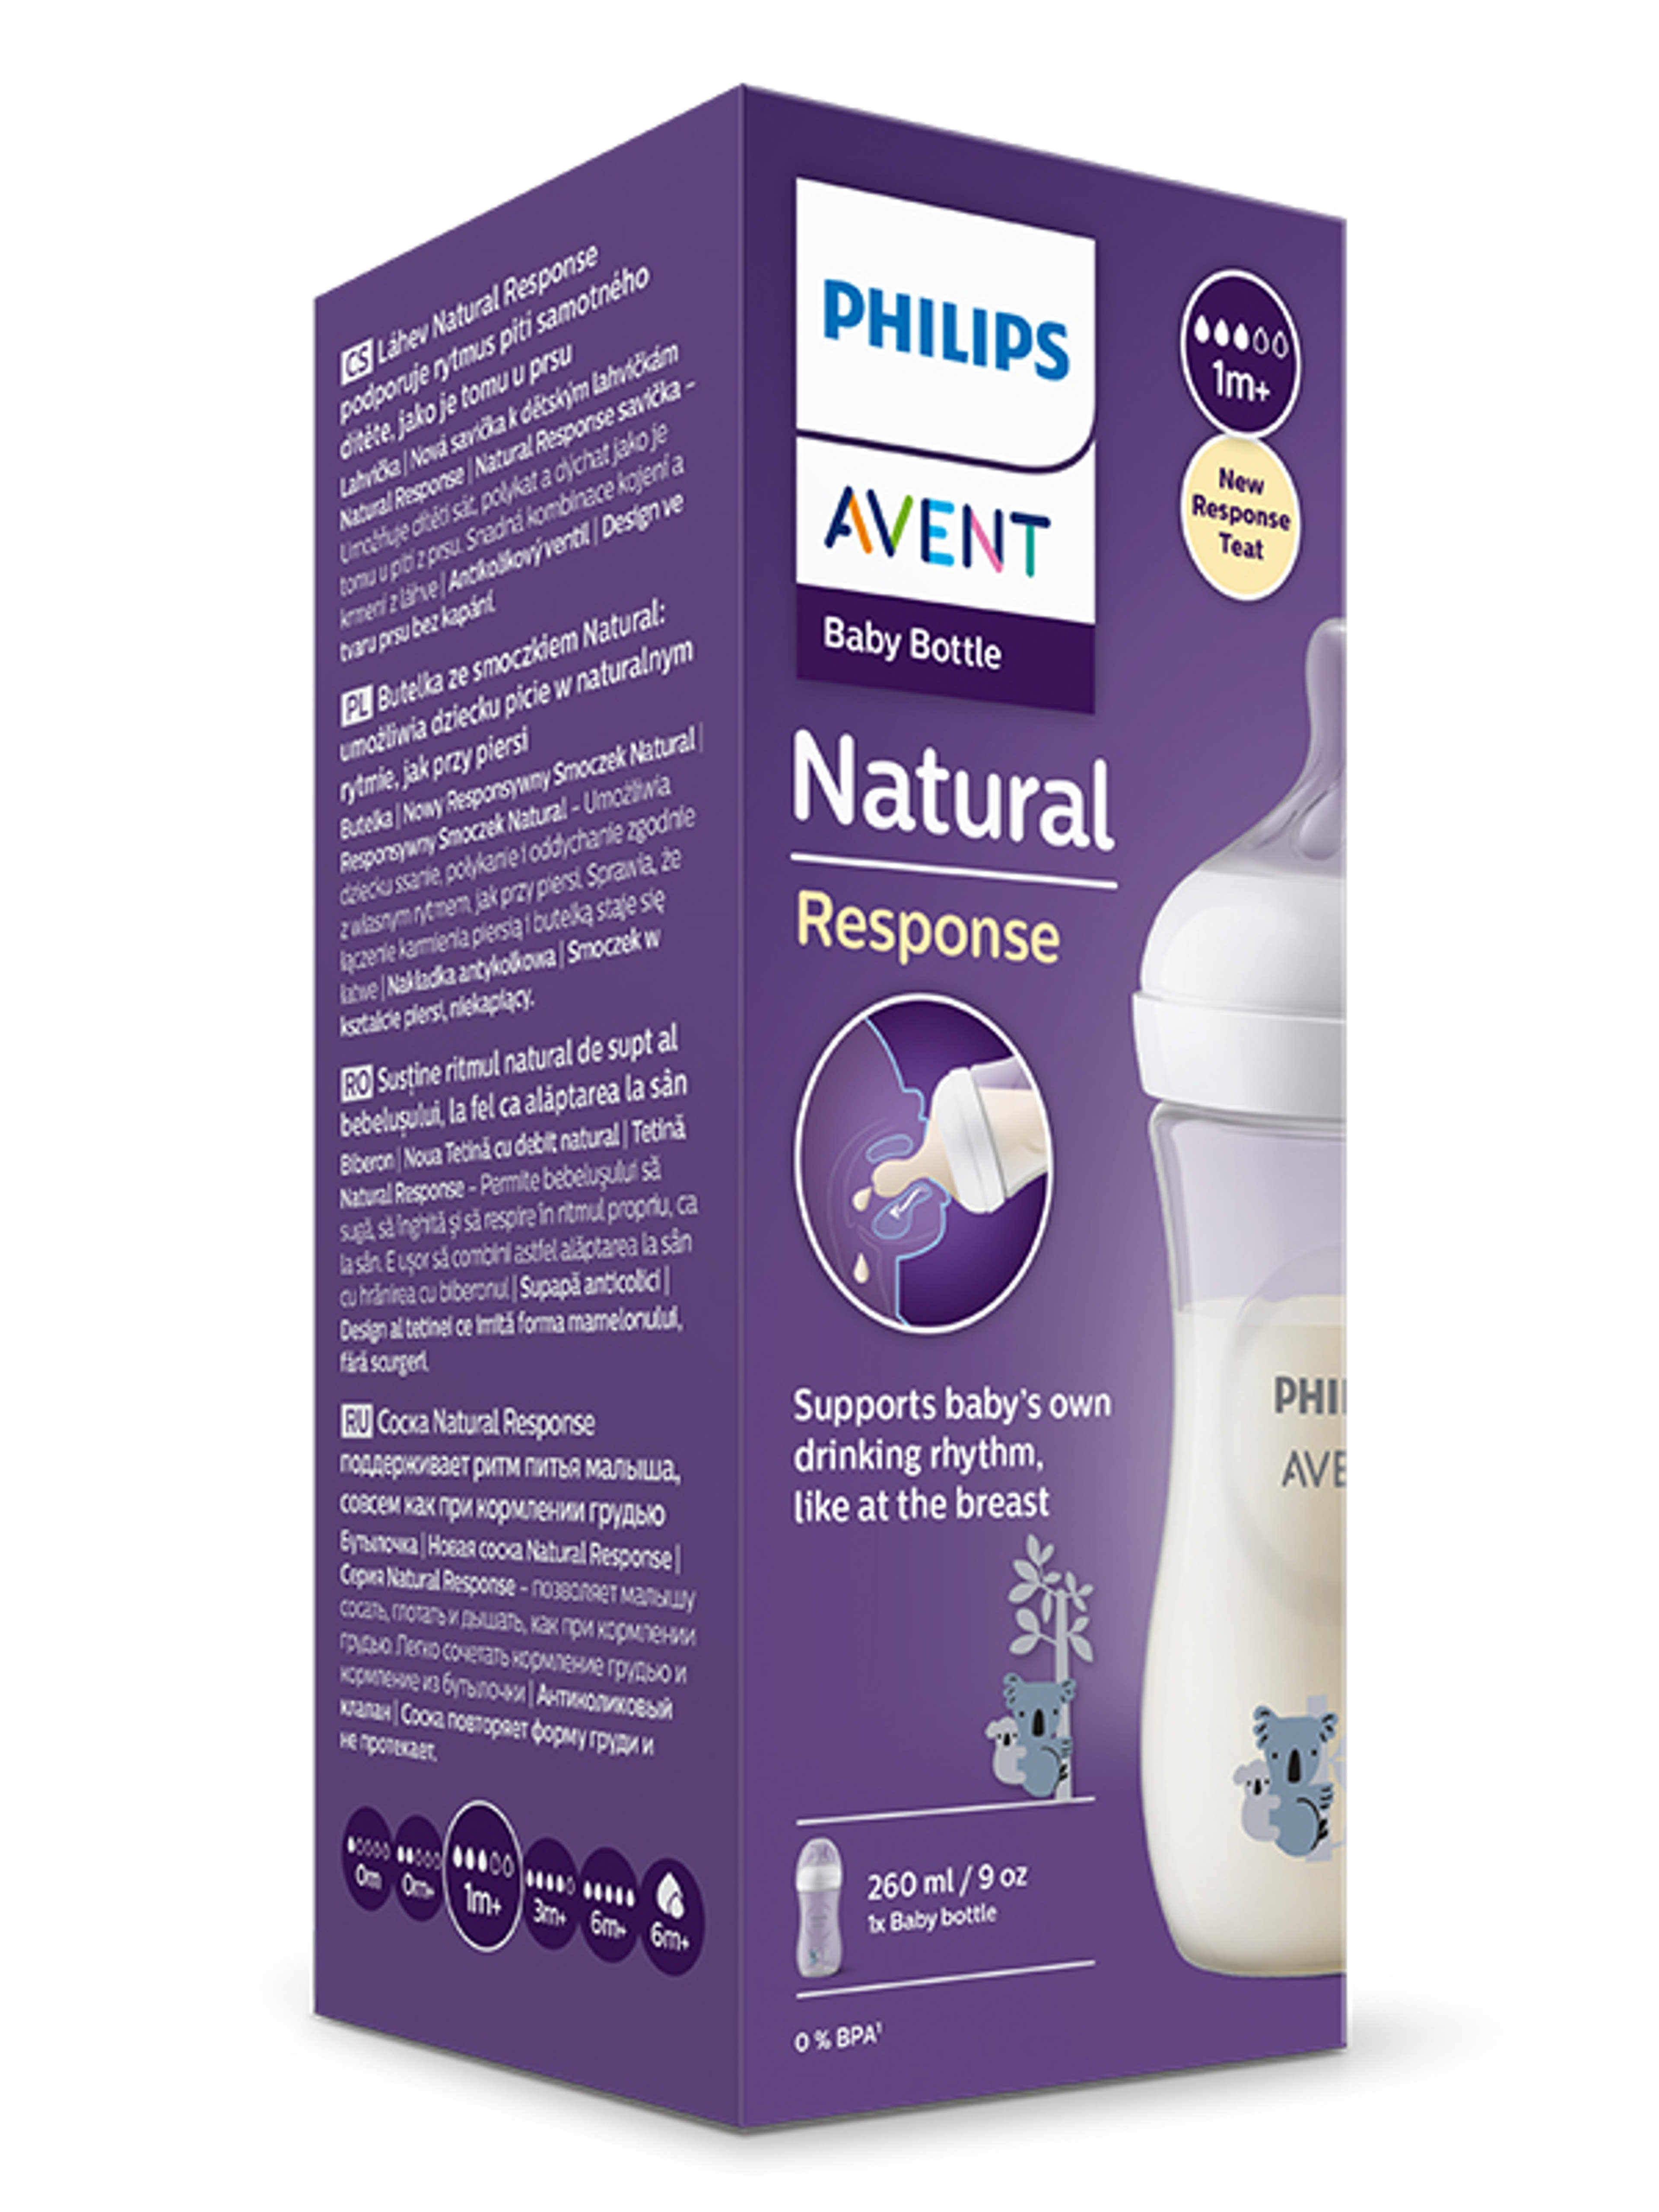 Philips Avent Natural Response cumisüveg 1 hónapos kortól 260 ml - 1 db-3